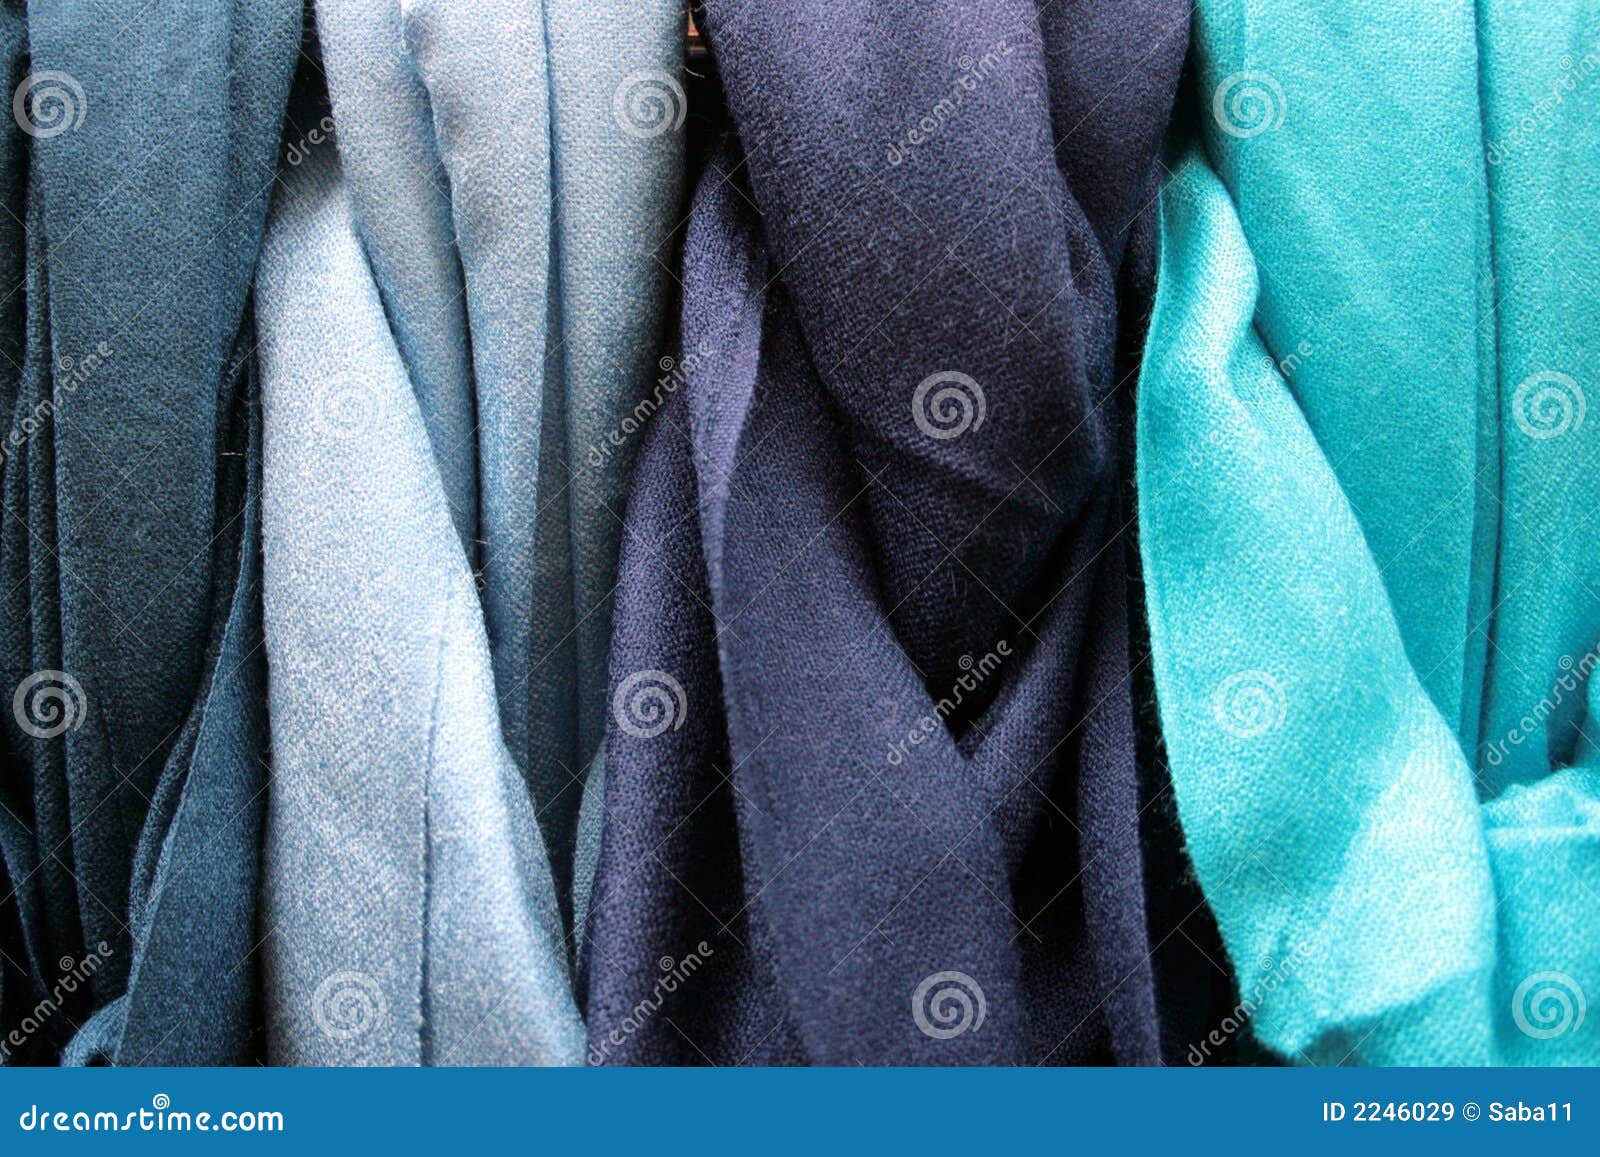 blue coloured cotton gradation